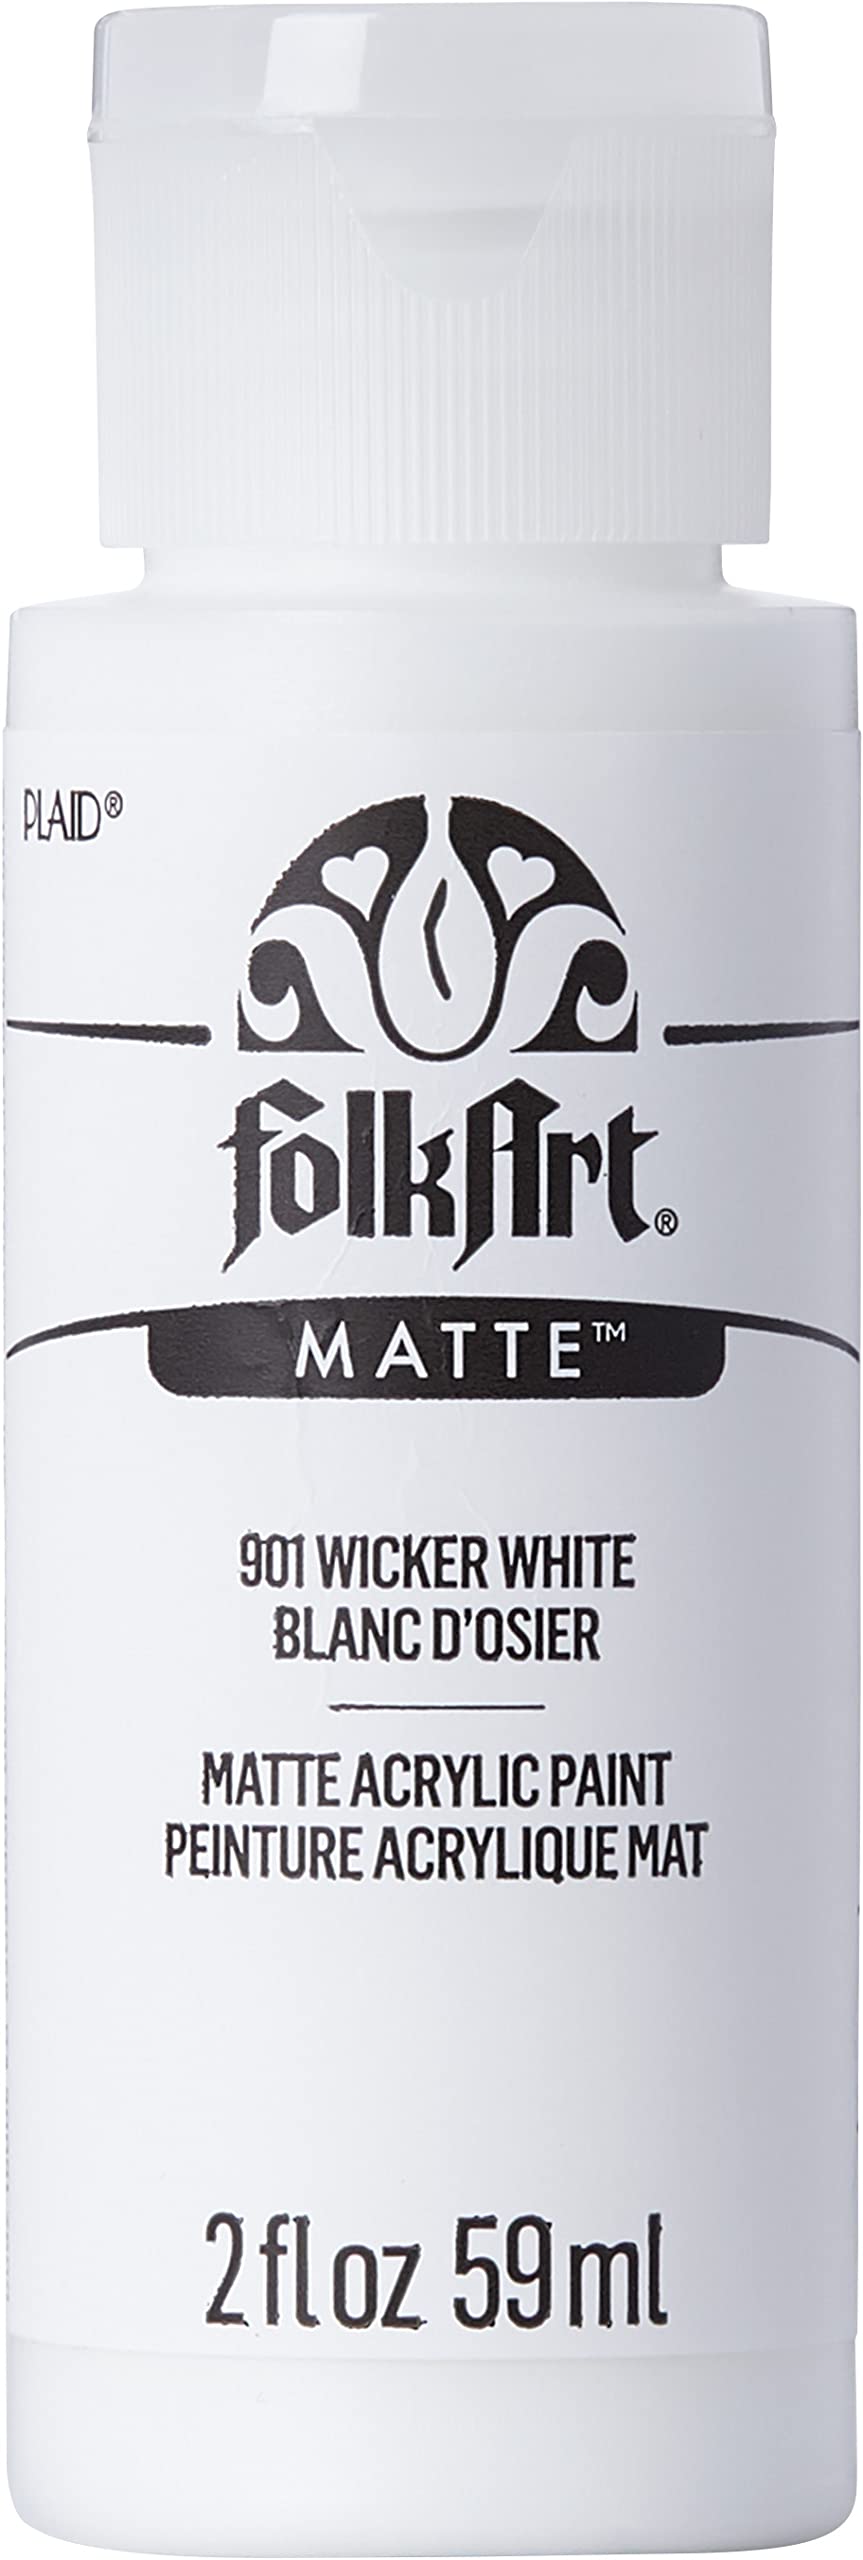 Shop Plaid FolkArt ® Acrylic Colors - Wicker White, 2 oz. - 901